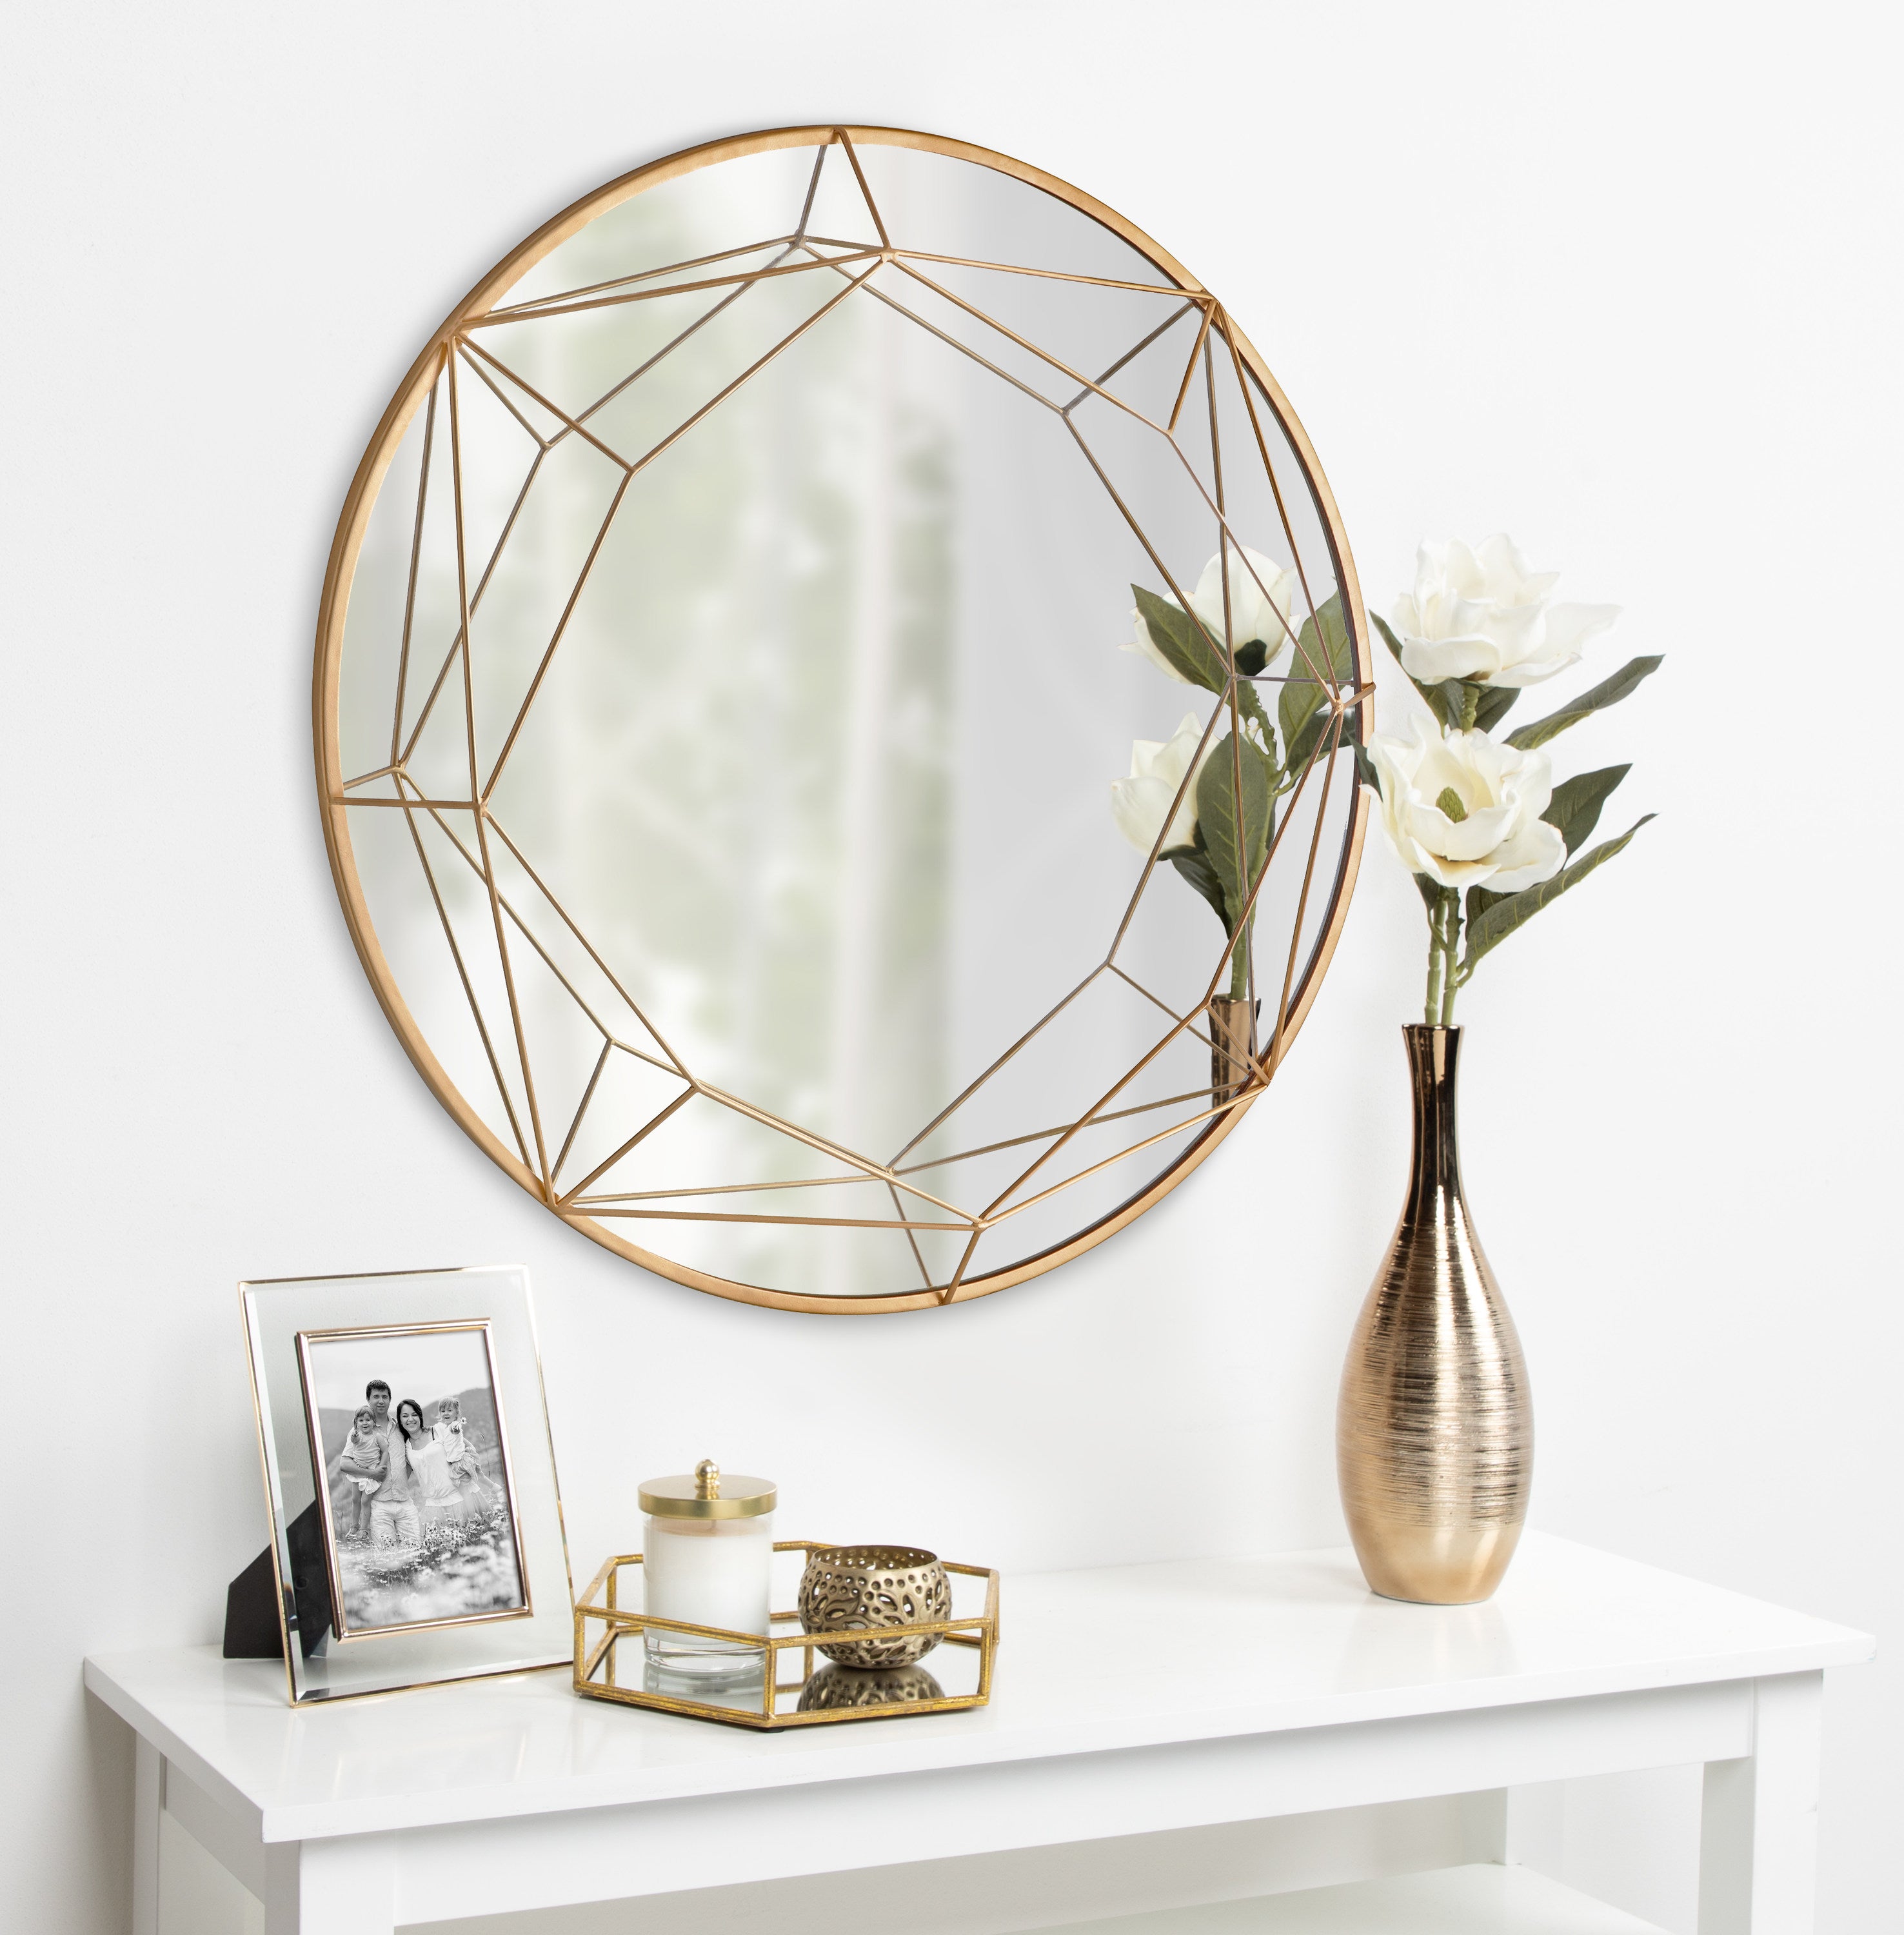 Keyleigh Round Metal Framed Wall Mirror